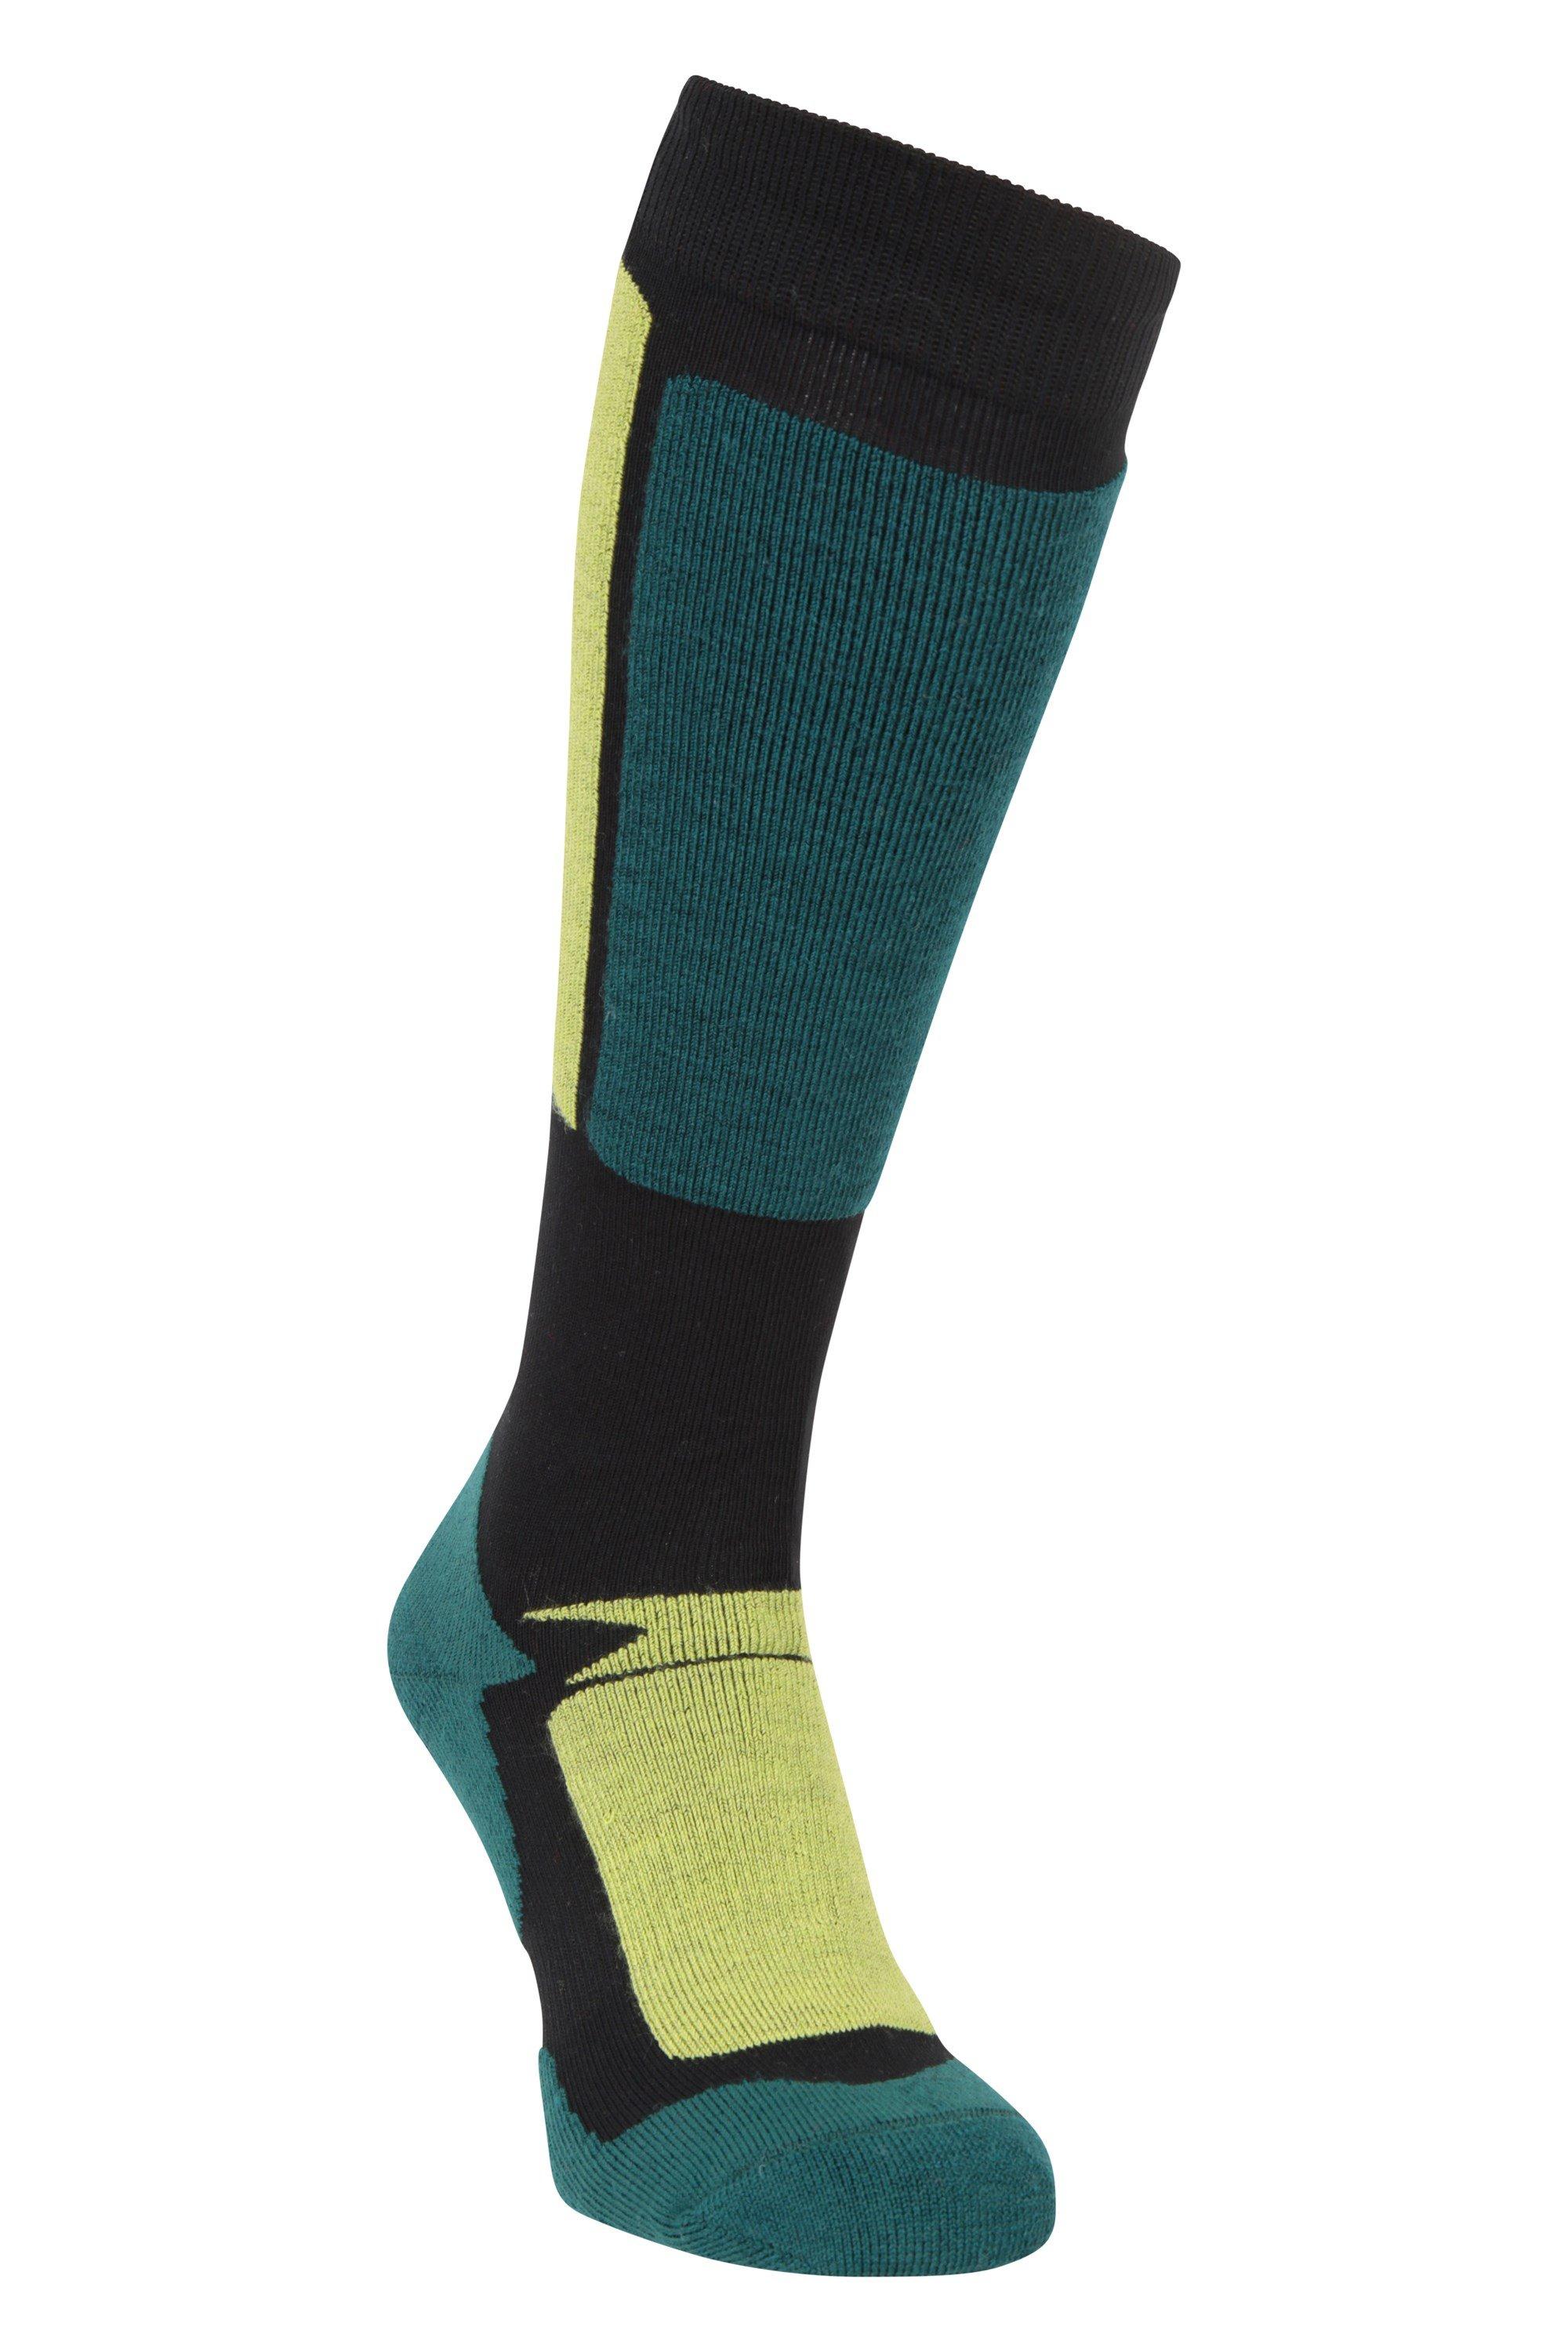 Ski Sock Extreme Merino Lightweight Winter Warm Socks